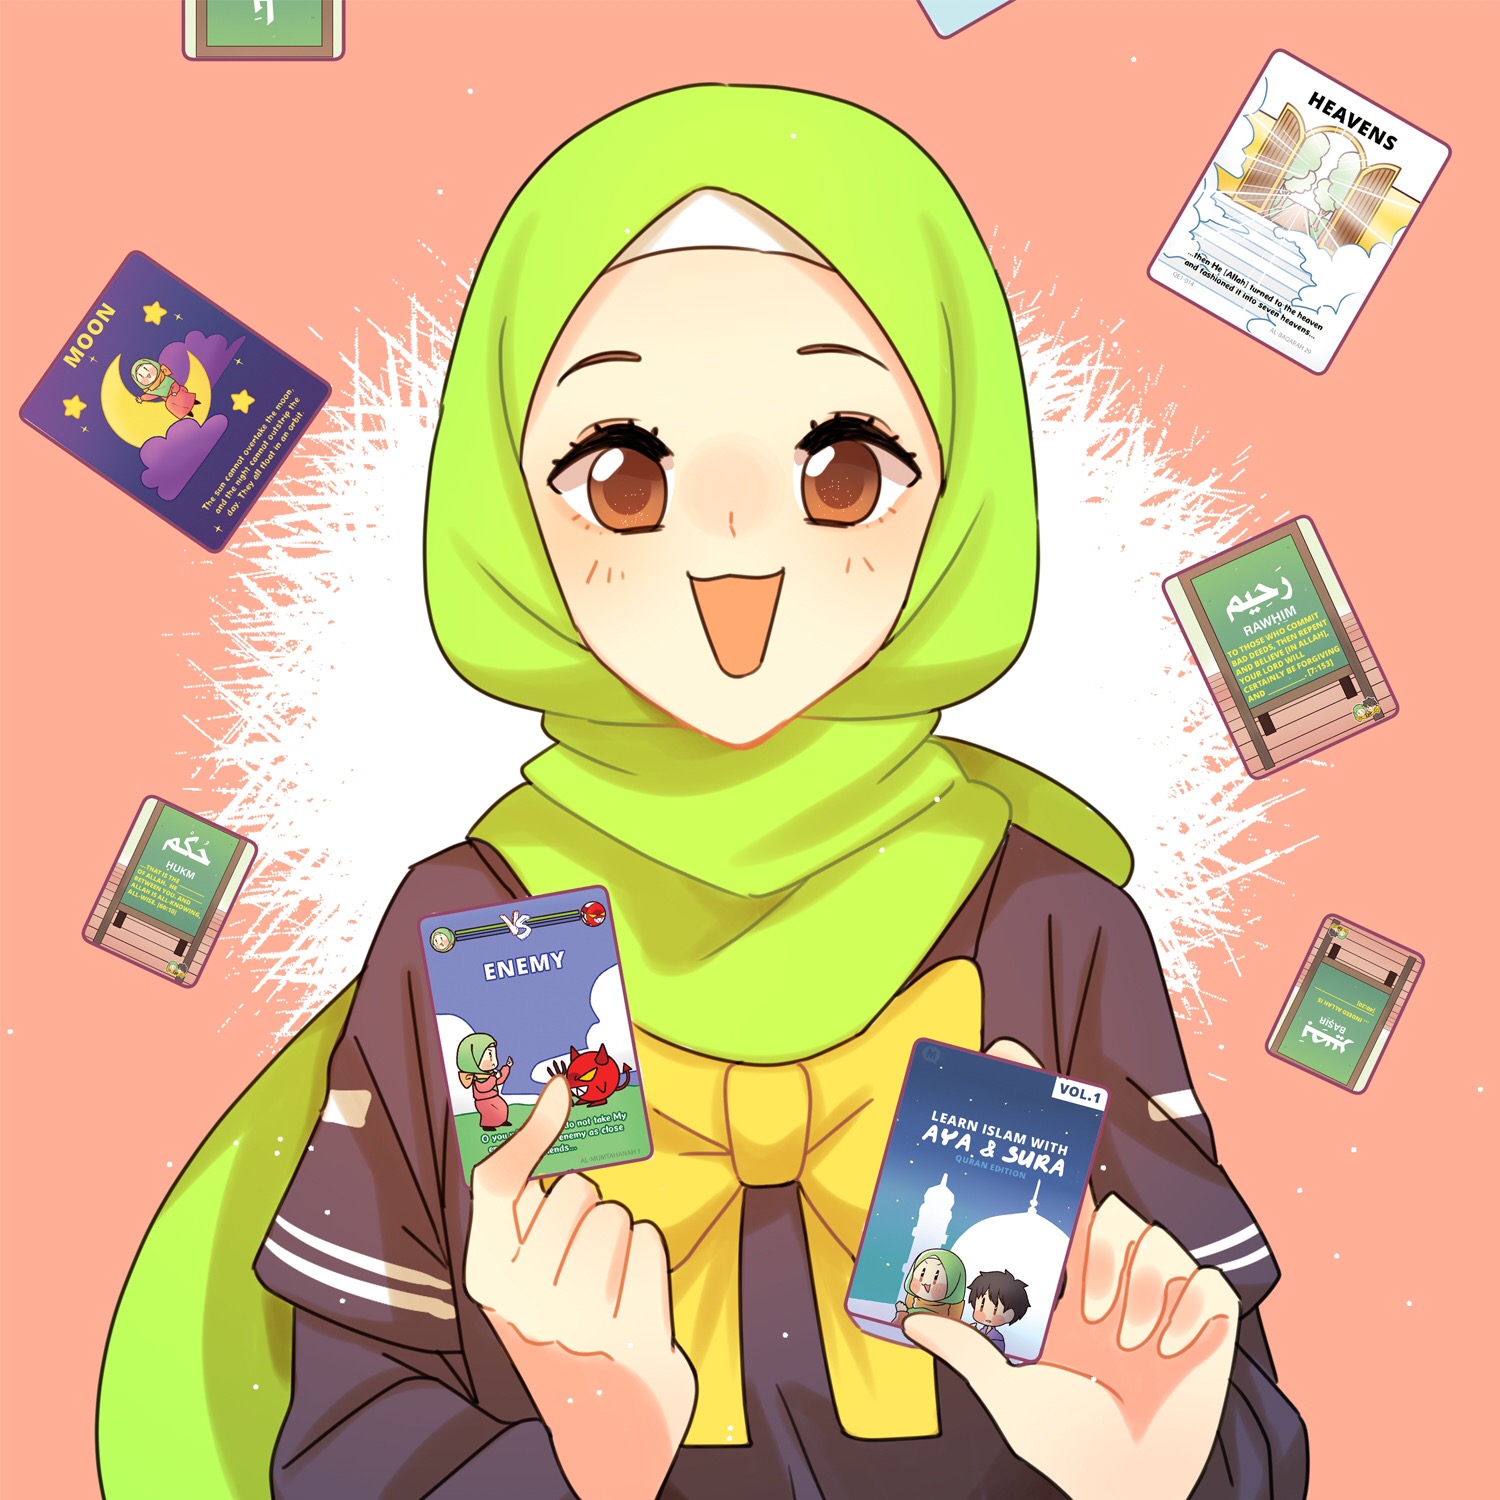 Muslim Manga | Read Muslim focused graphic novels and comic-strips - Read  Muslim focused graphic novels and comic-strips